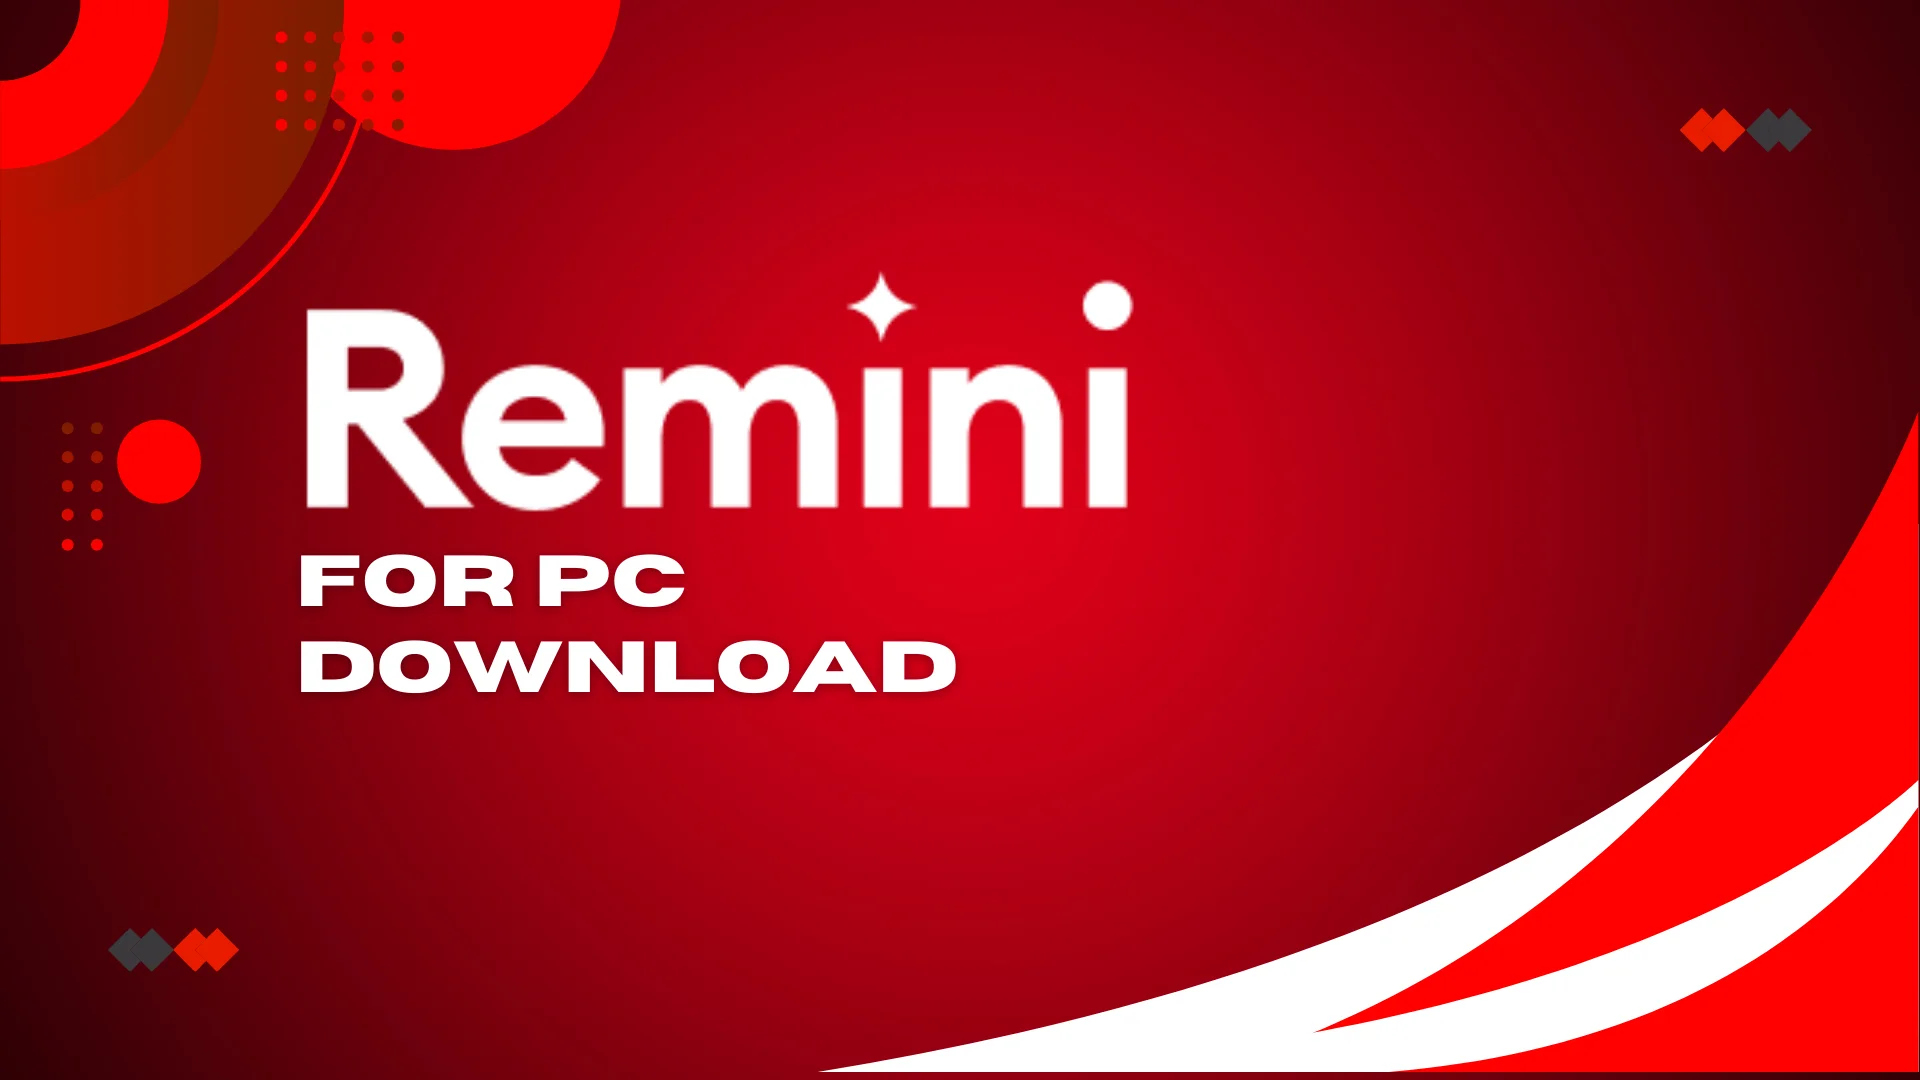 Remini Ai Apk, Enhance Your Photos And Videos